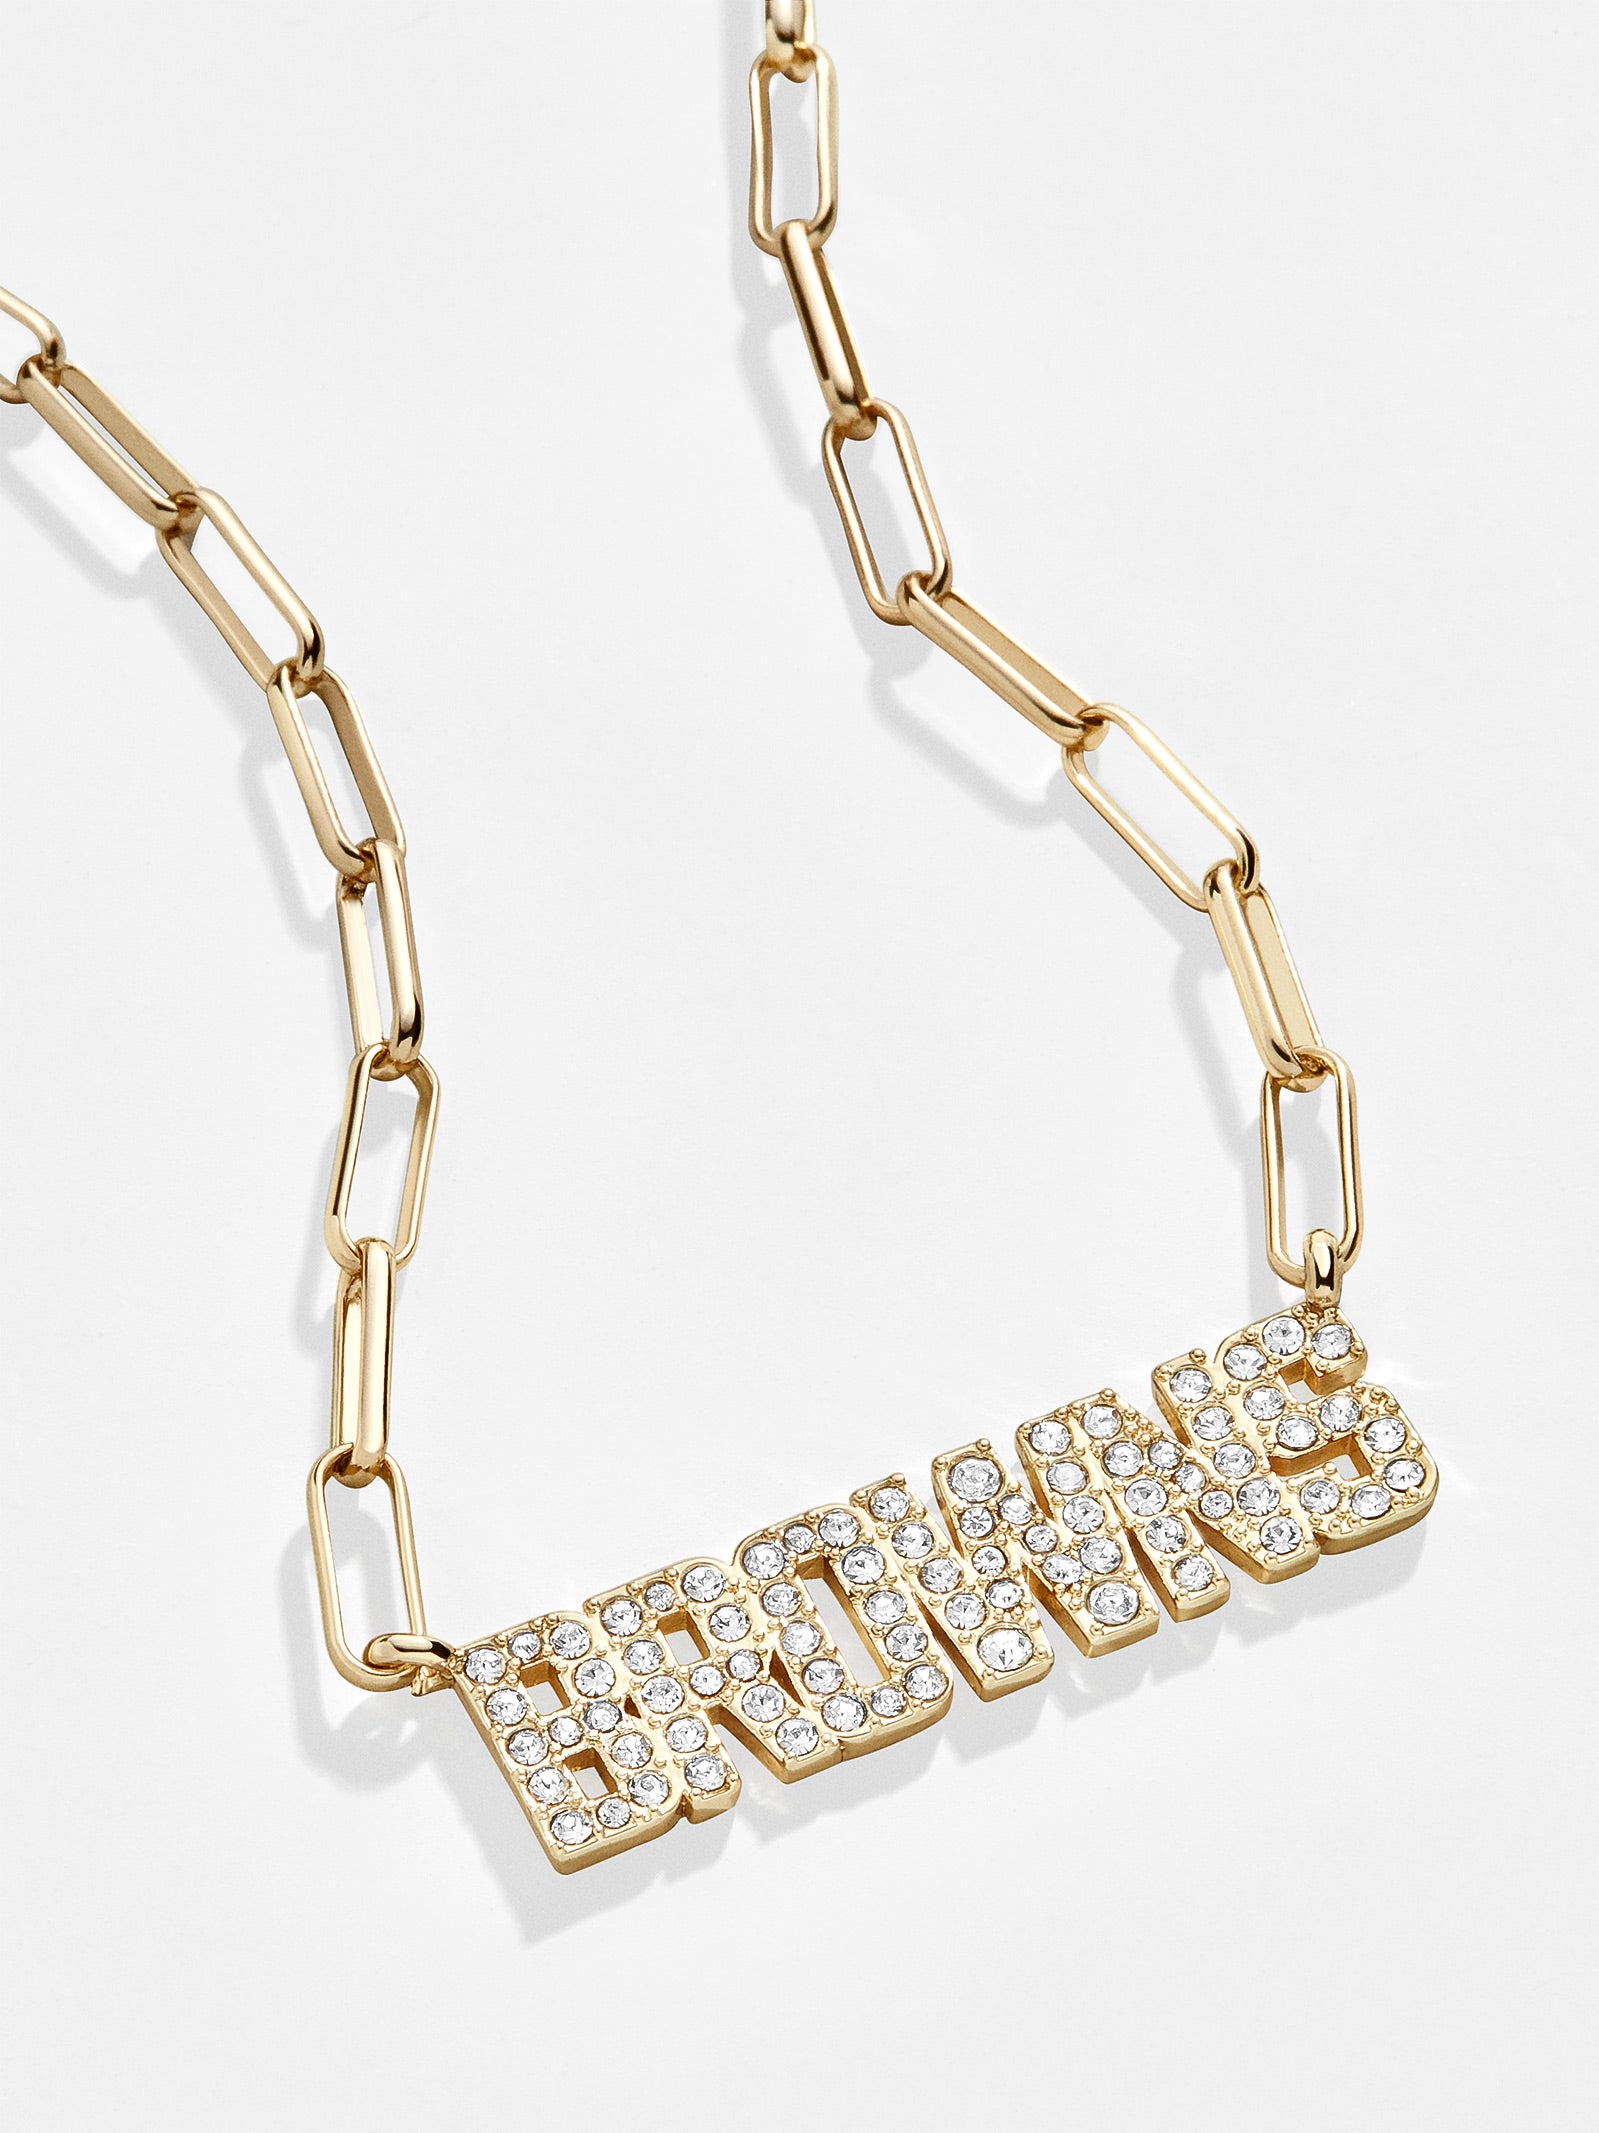 Baublebar Cleveland Browns NFL Gold Chain Necklace - Cleveland Browns